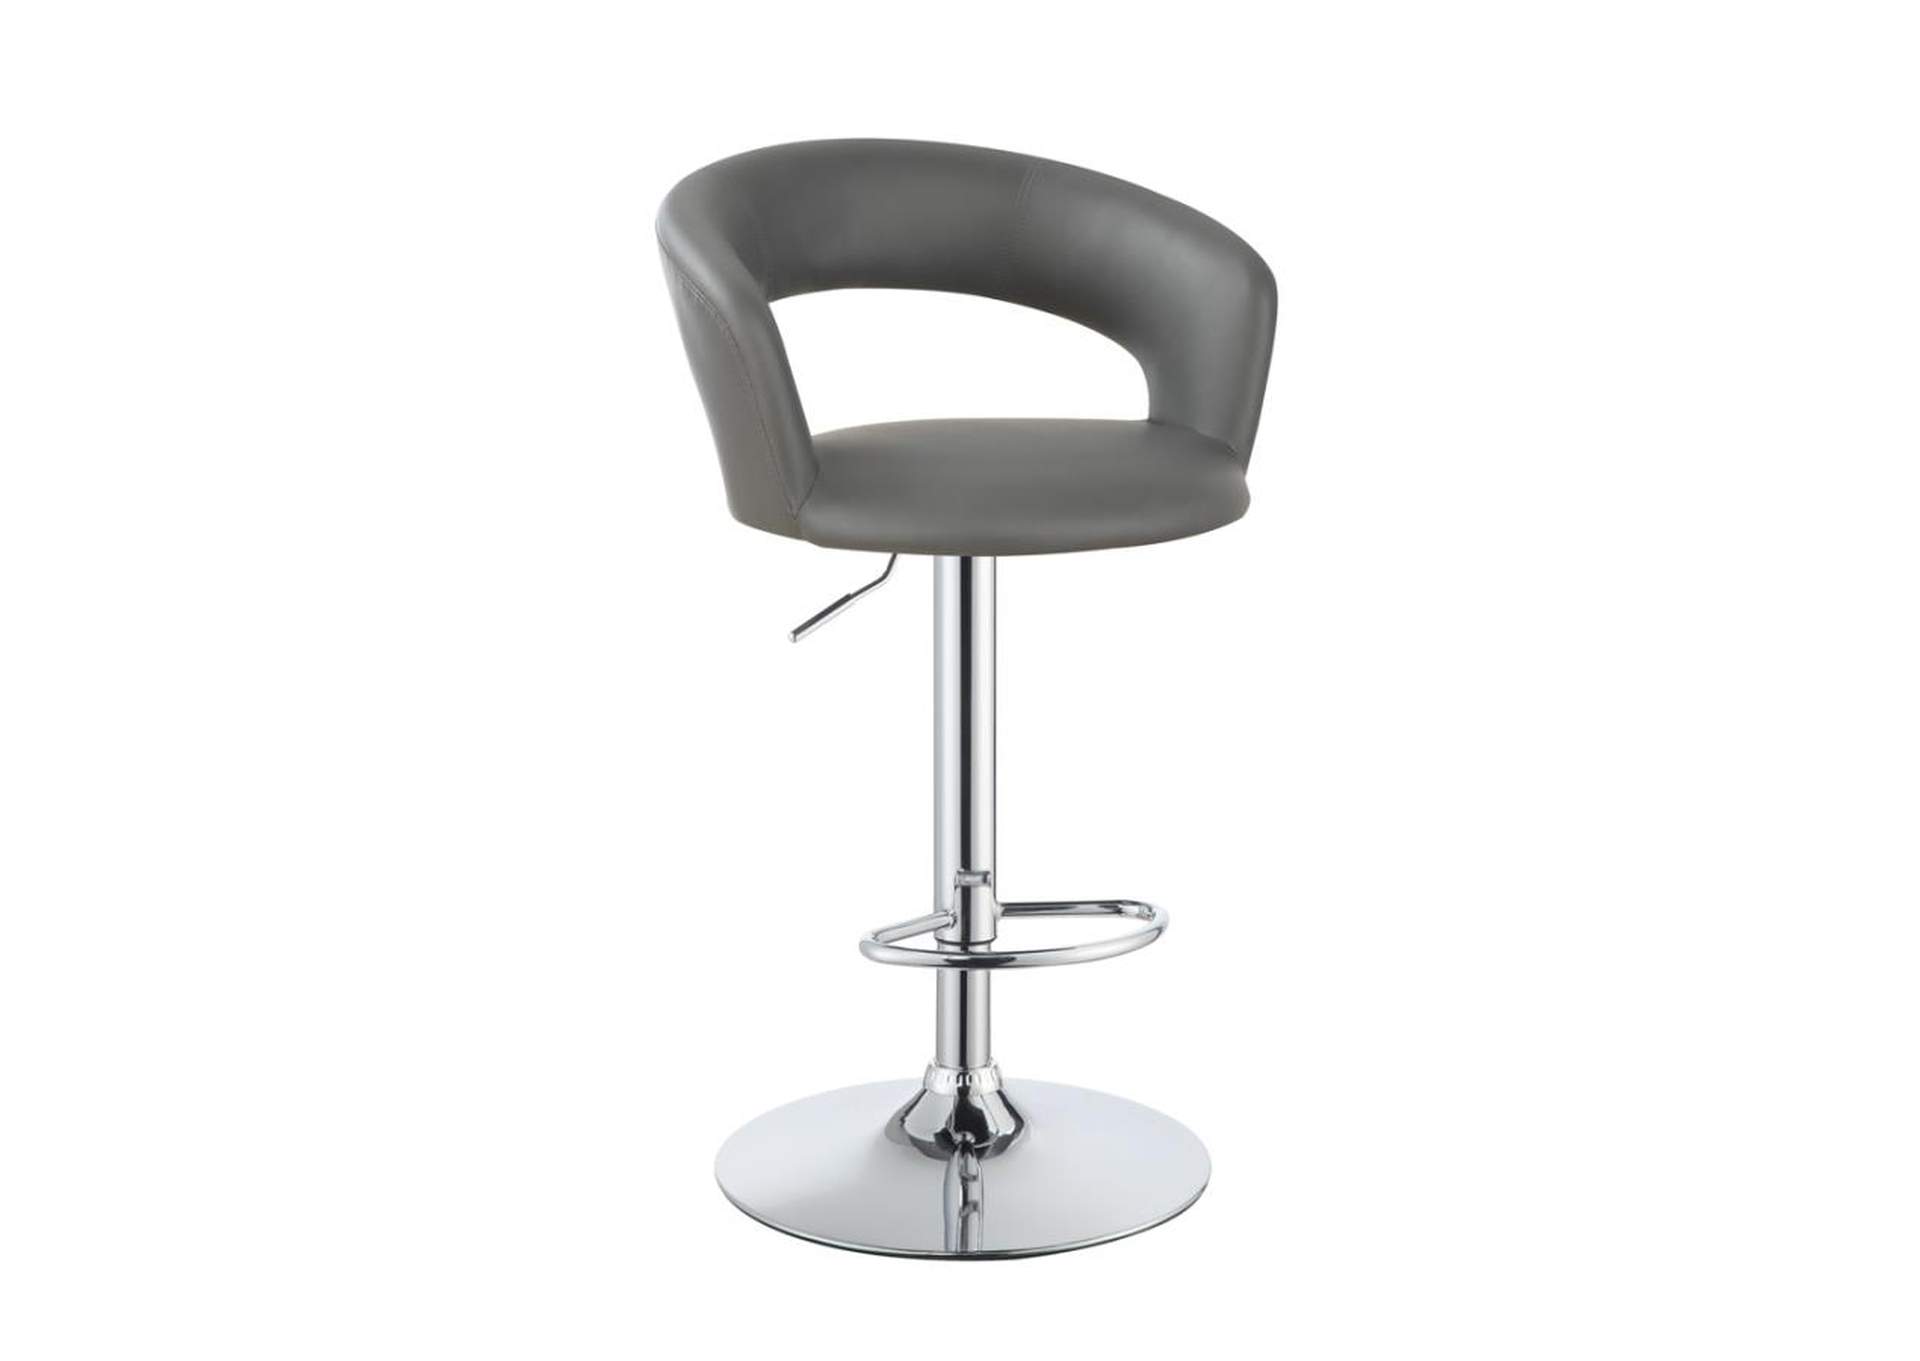 29" Adjustable Height Bar Stool Grey and Chrome,Coaster Furniture